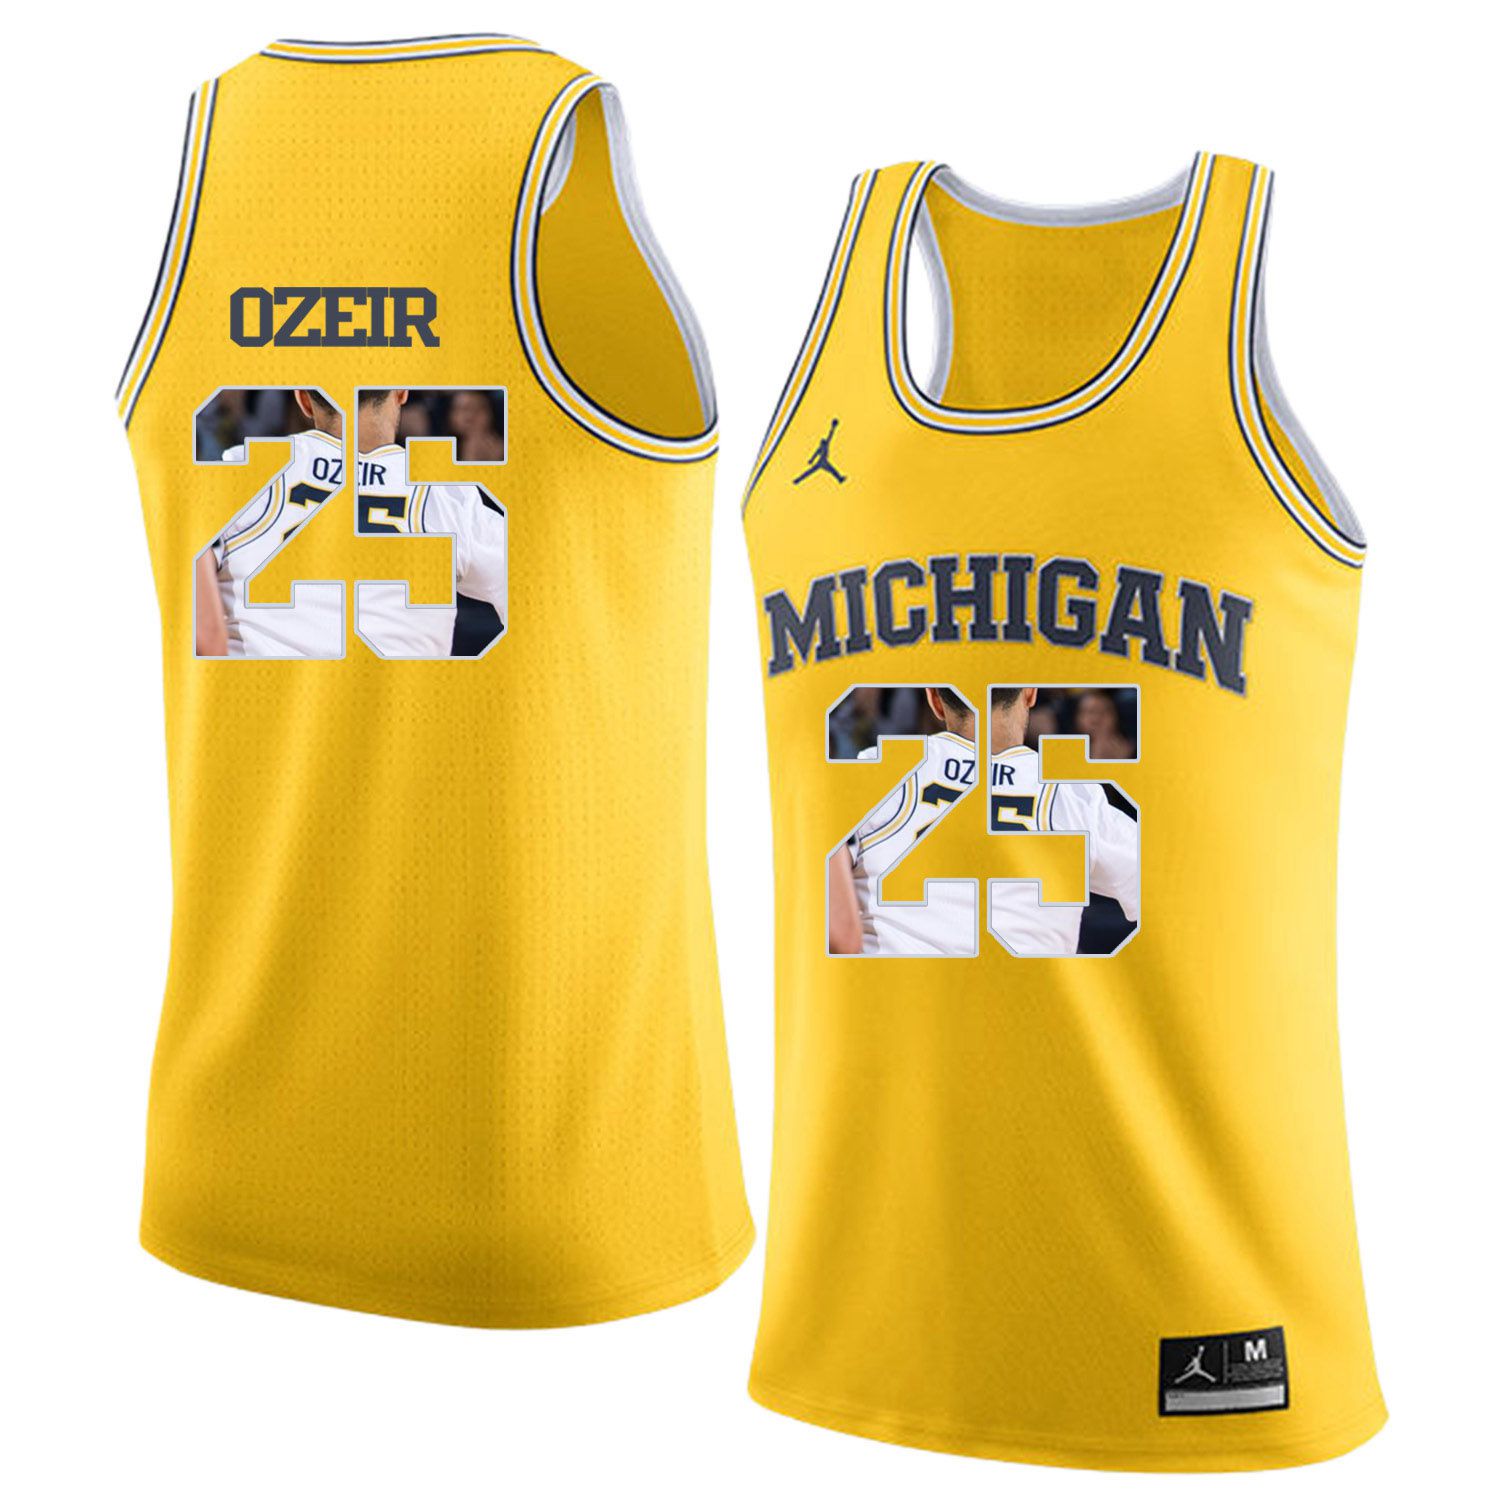 Men Jordan University of Michigan Basketball Yellow 25 Ozeir Fashion Edition Customized NCAA Jerseys